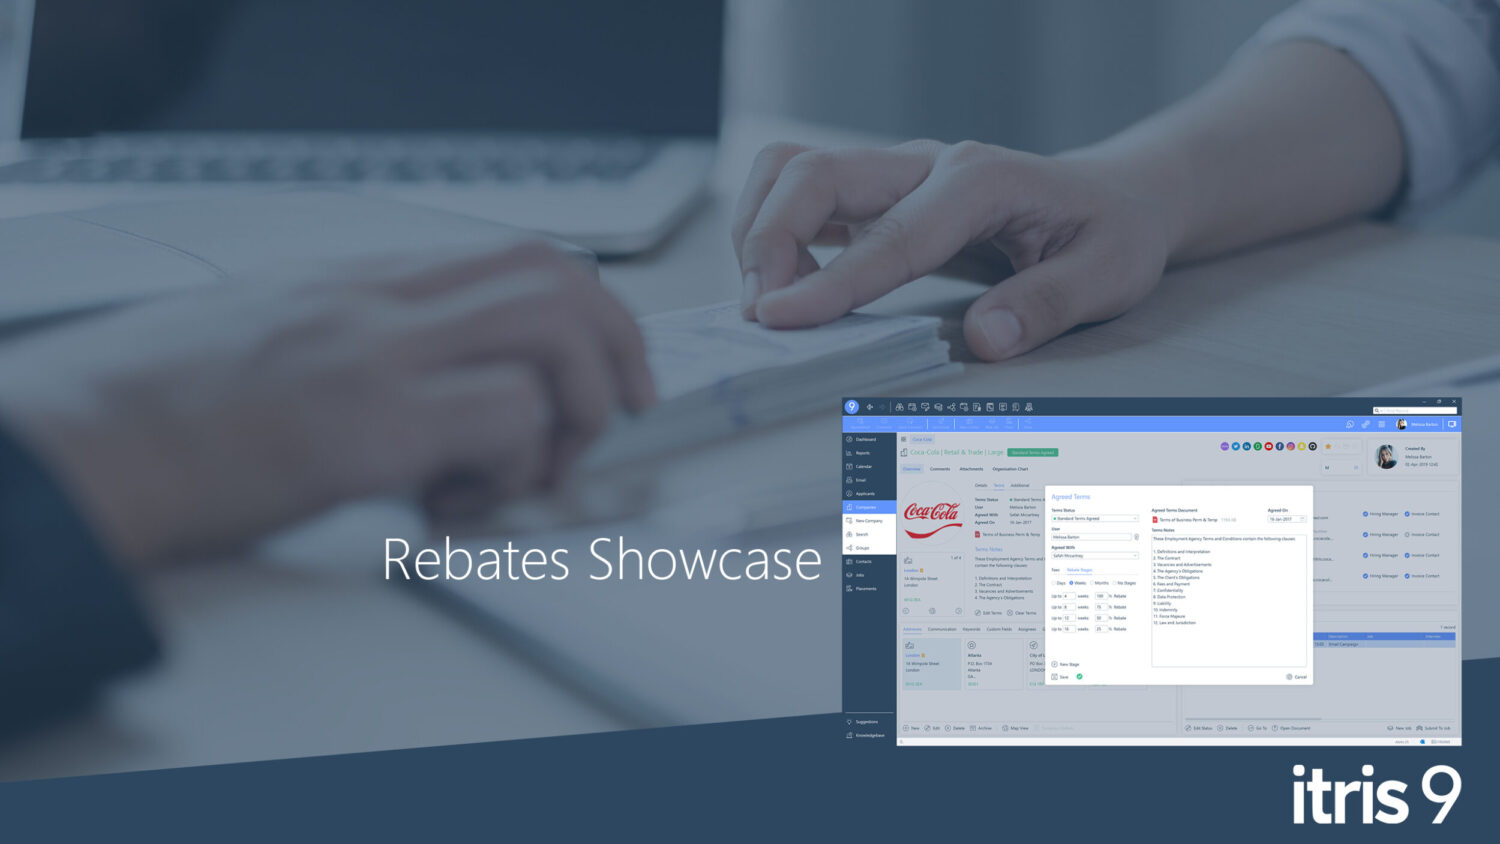 Recruitment CRM software itris 9 | Rebates | Showcase Video